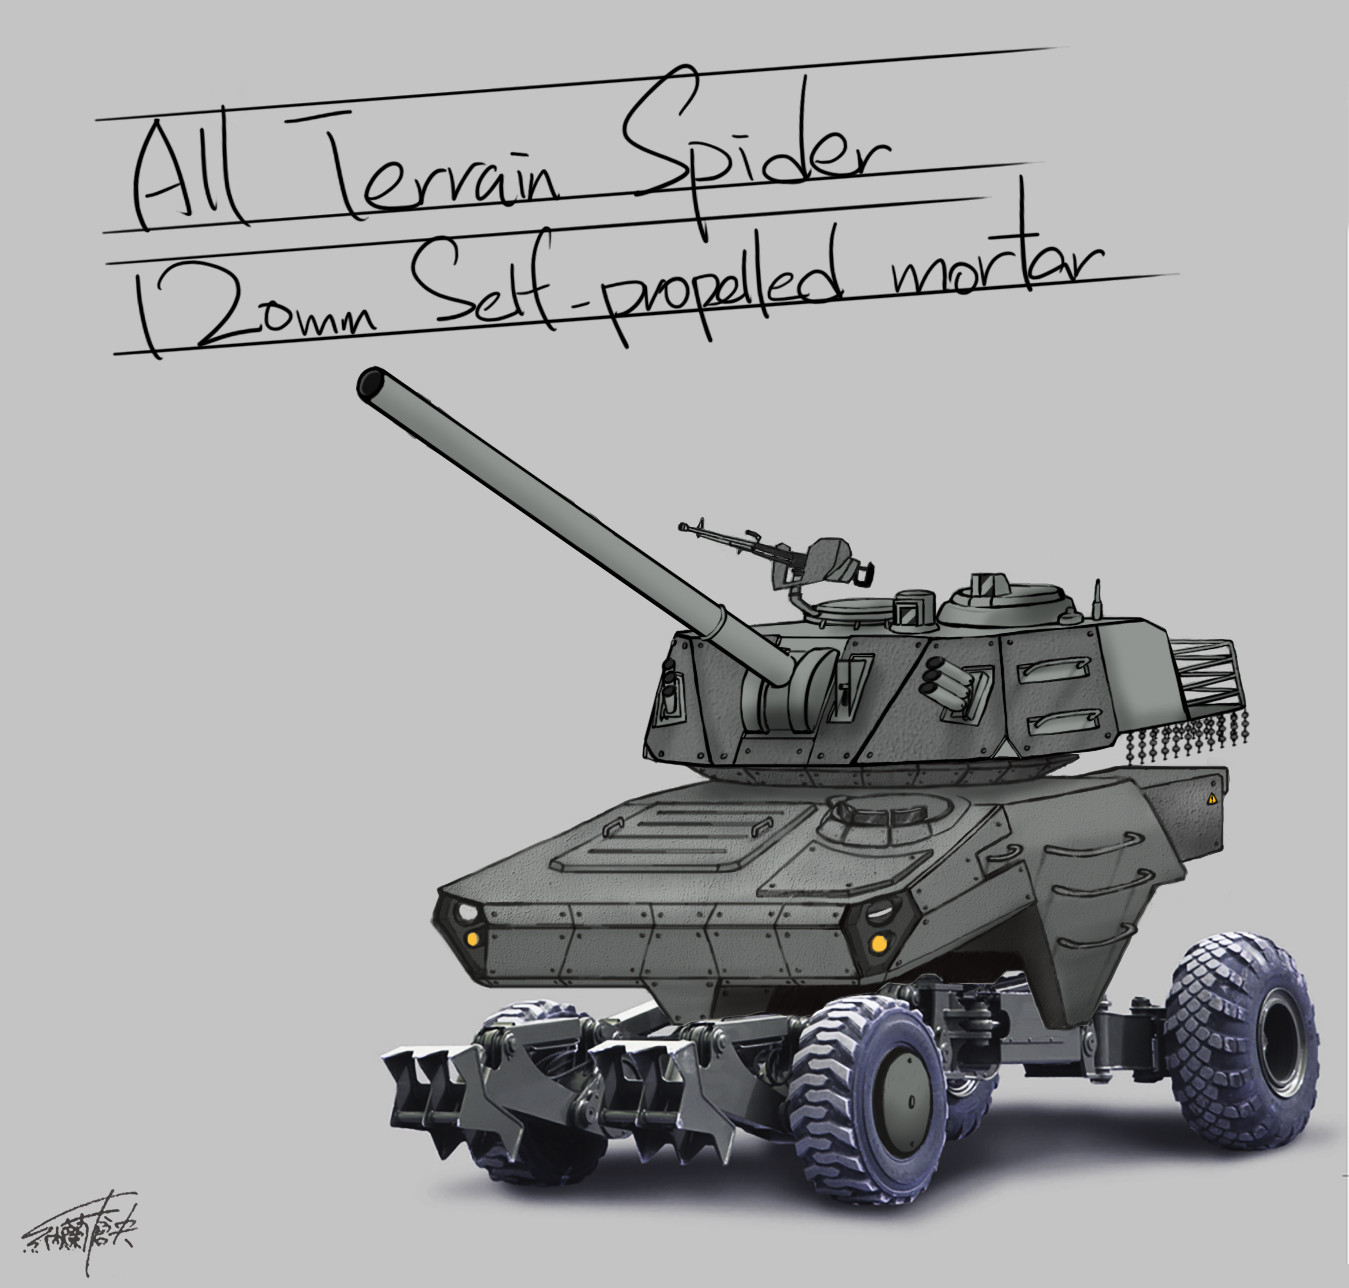 All Terrain Spider 
120mm self-propelled mortar